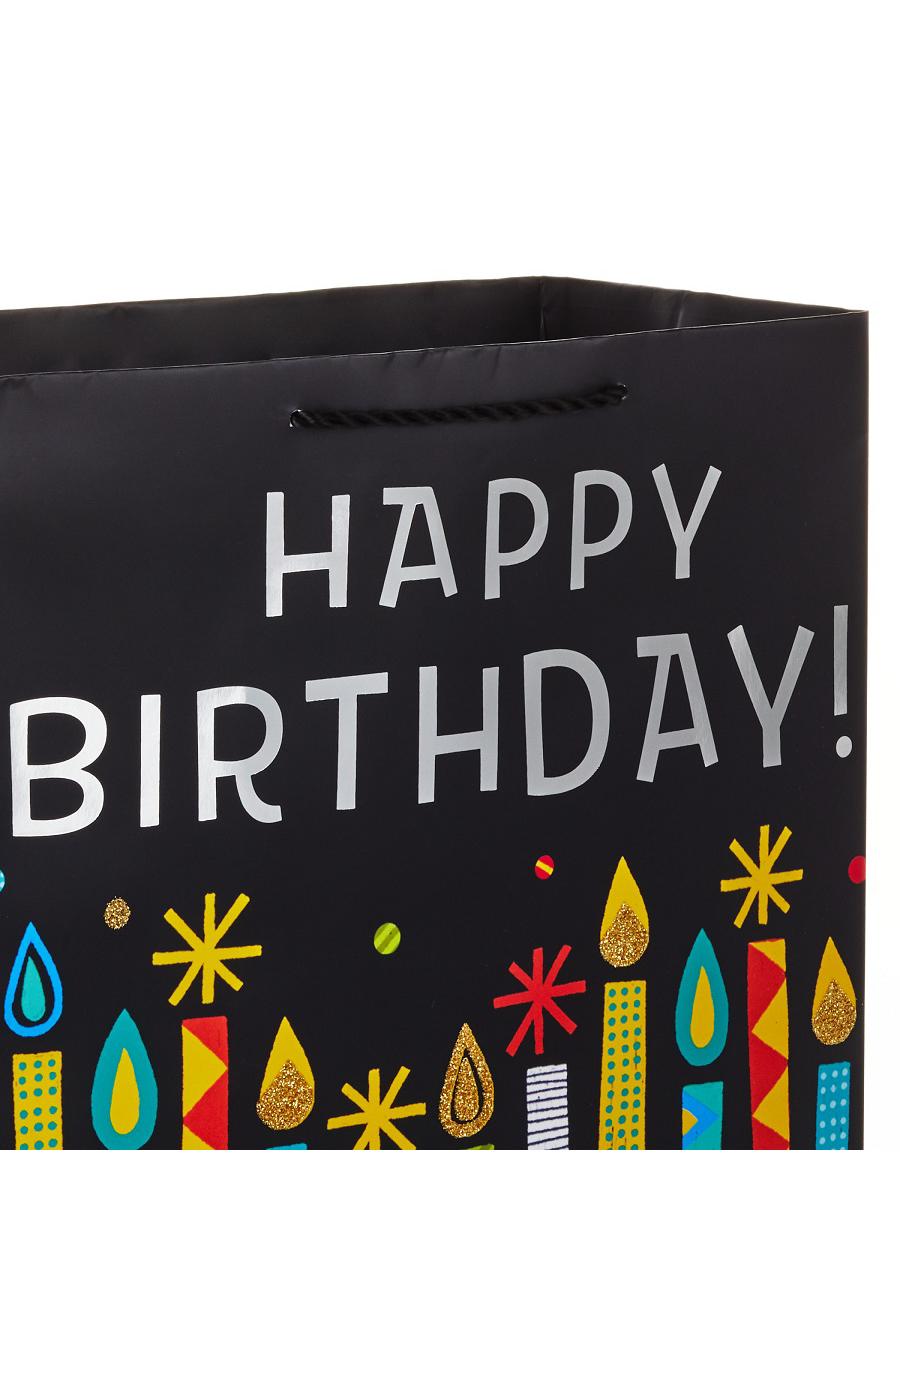 Hallmark Happy Birthday Candles Gift Bag - Black; image 5 of 5